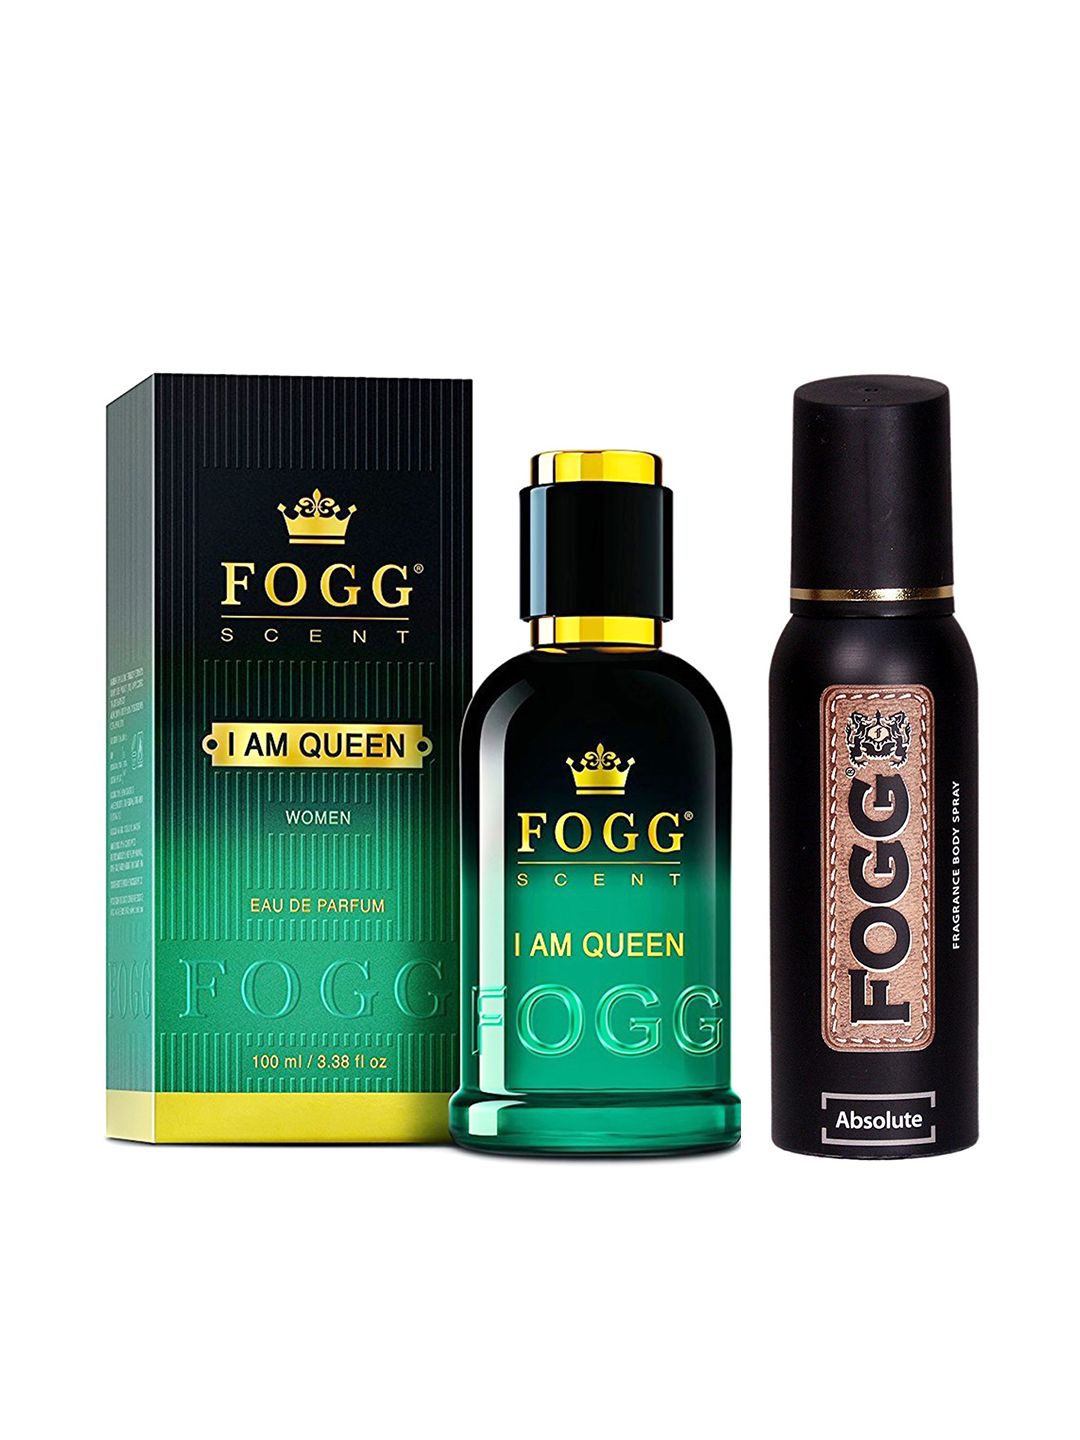 Fogg Set of Scent I Am Queen Eau De Parfum & Absolute Fragrance Body Spray 100ml+120ml Price in India